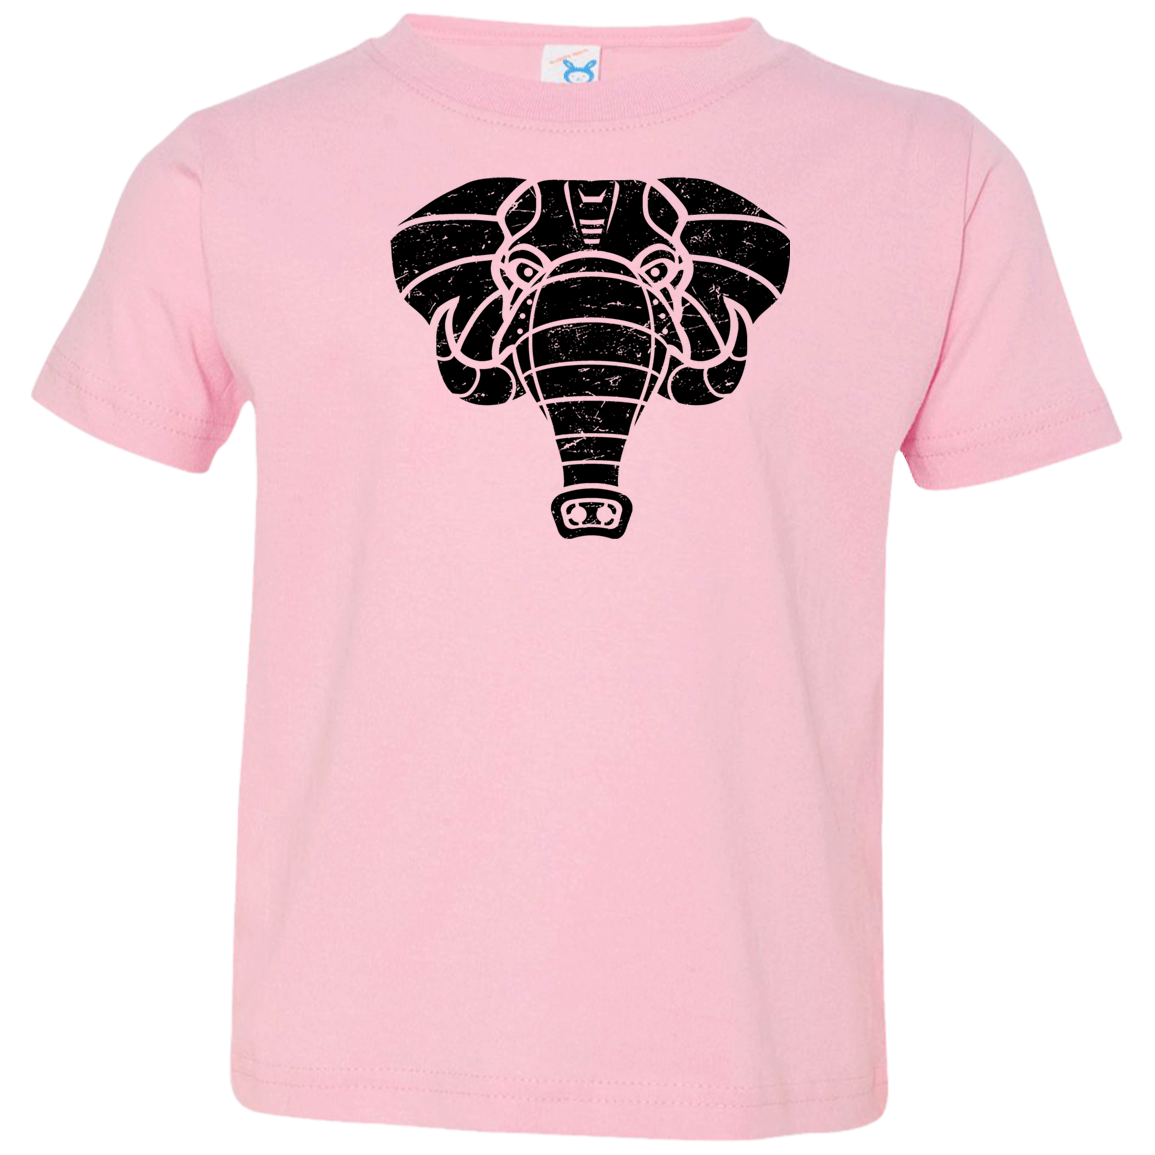 Black Distressed Emblem T-Shirt for Toddlers (Elephant/Quake)